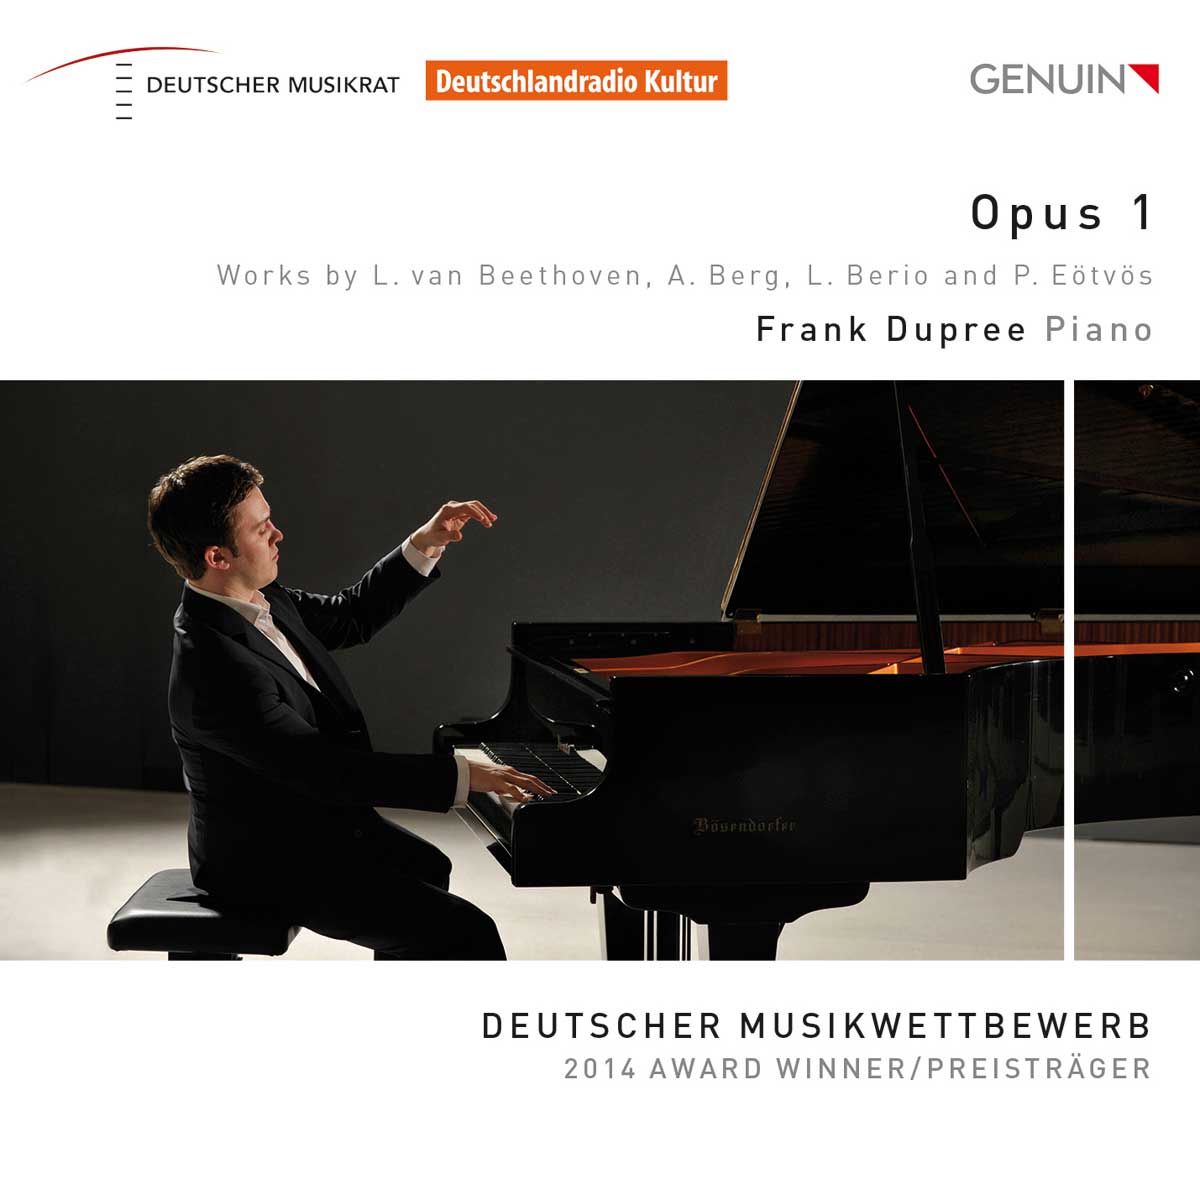 CD album cover 'Opus 1' (GEN 15368) with Frank Dupree